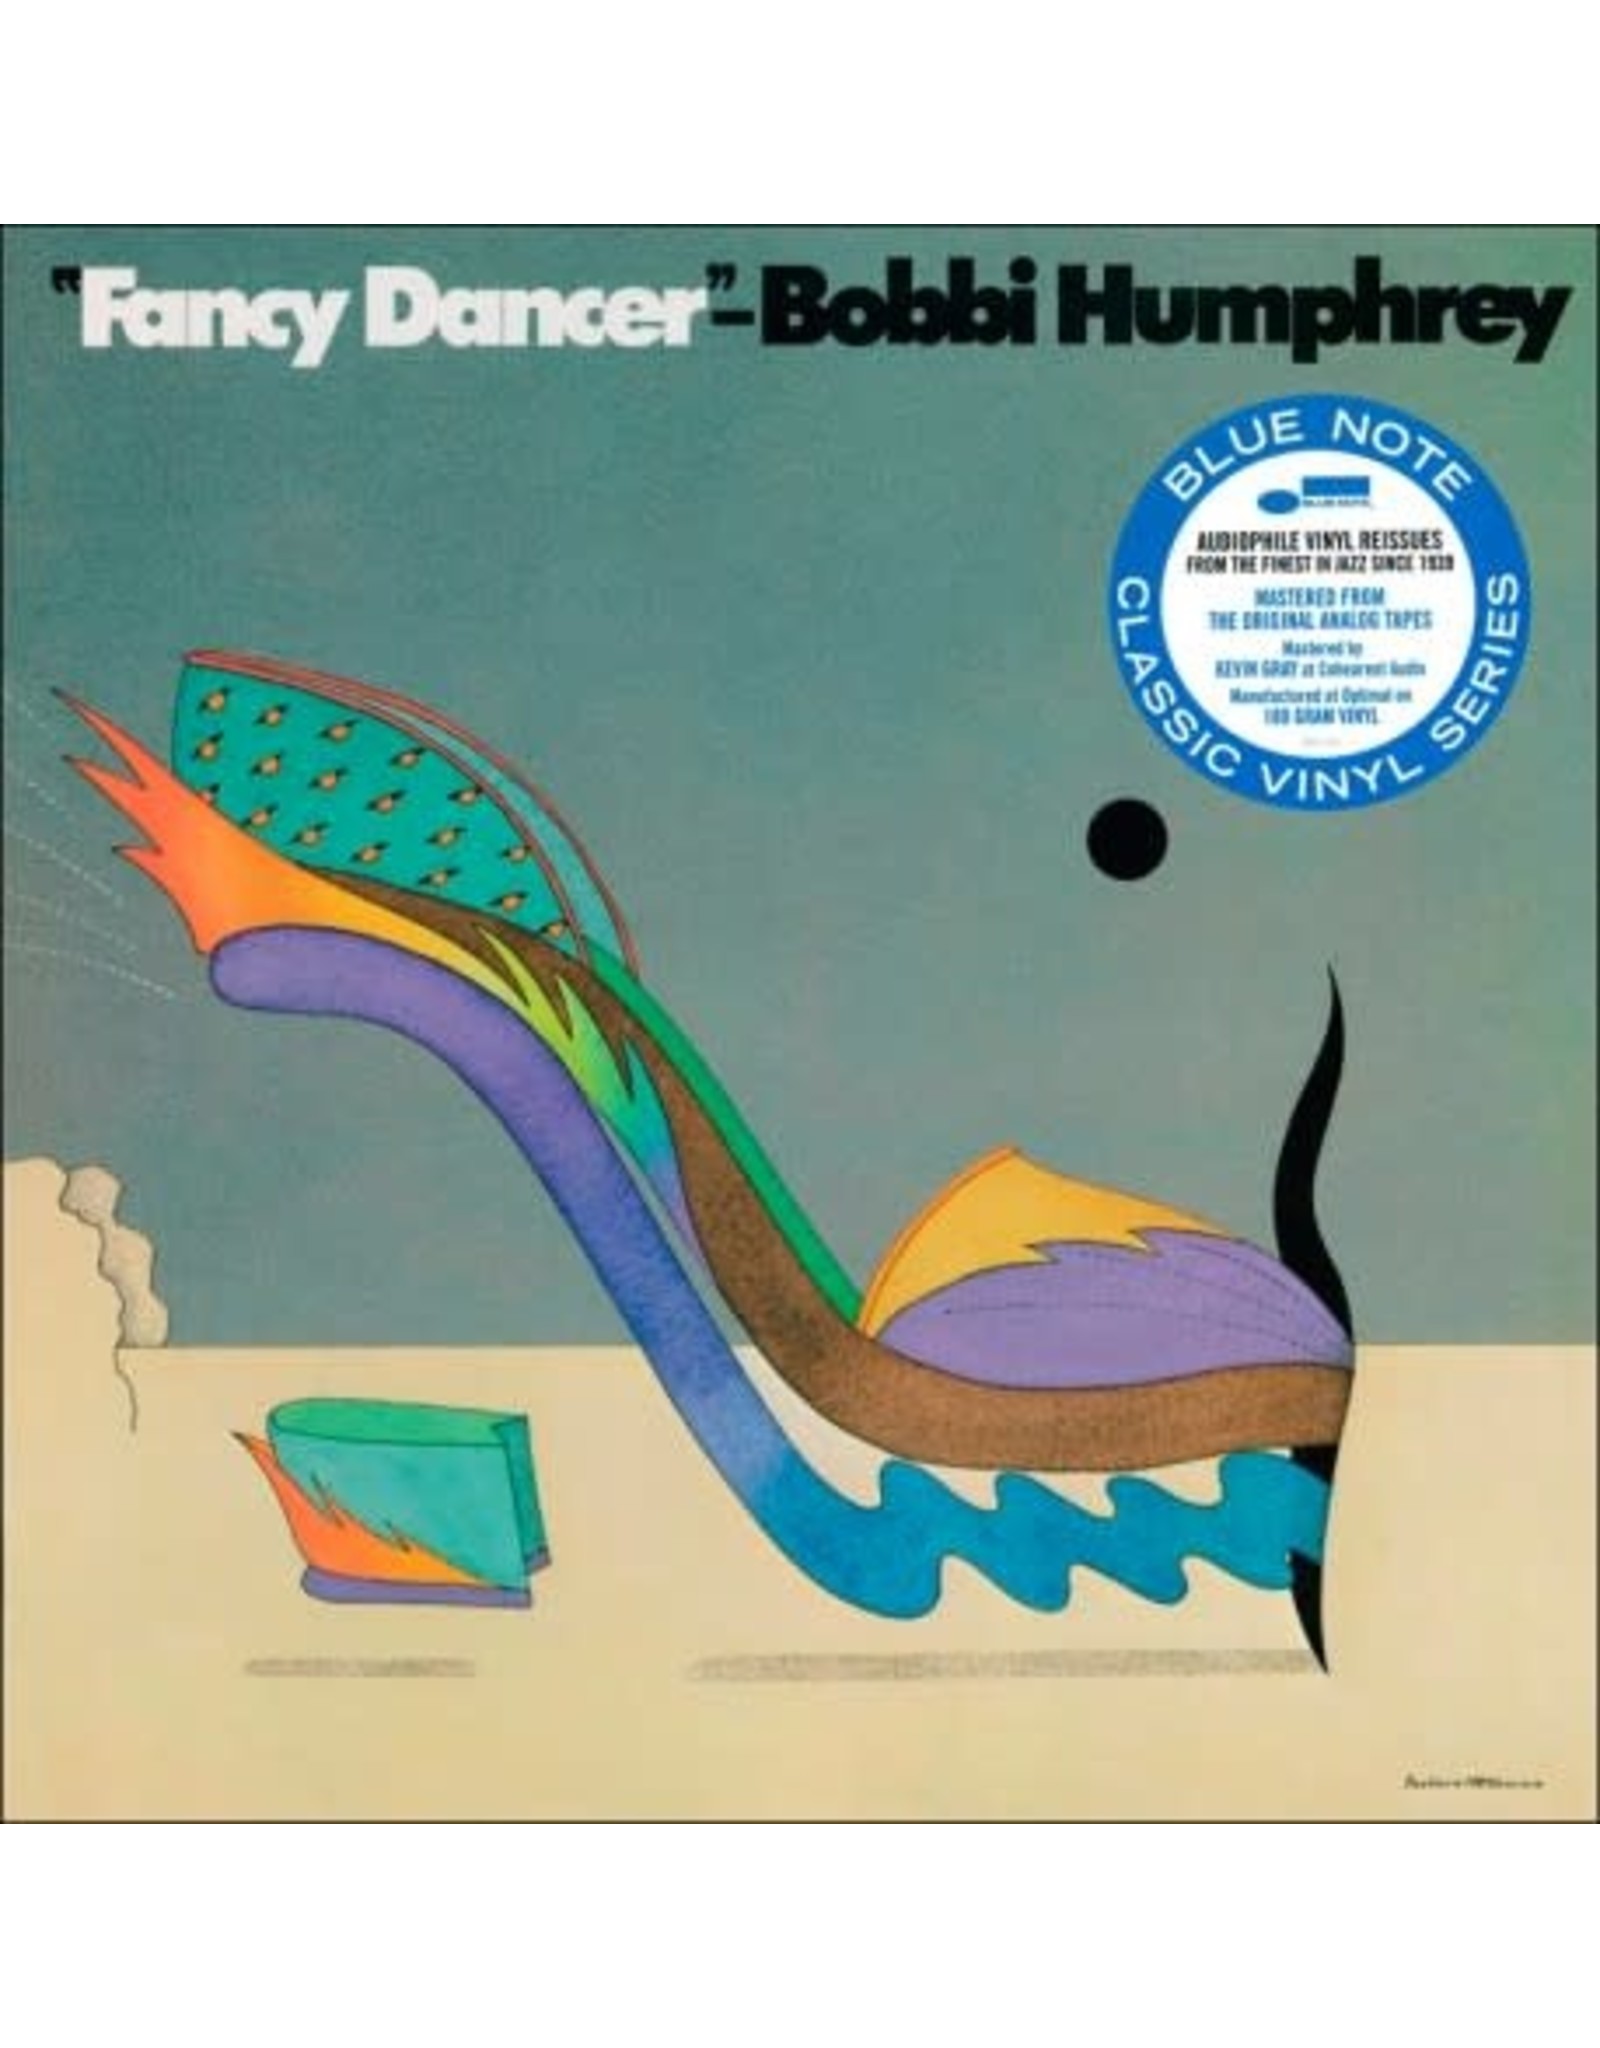 Humphrey, Bobbi - Fancy Dancer LP (180g) Blue Note Classic Vinyl Series